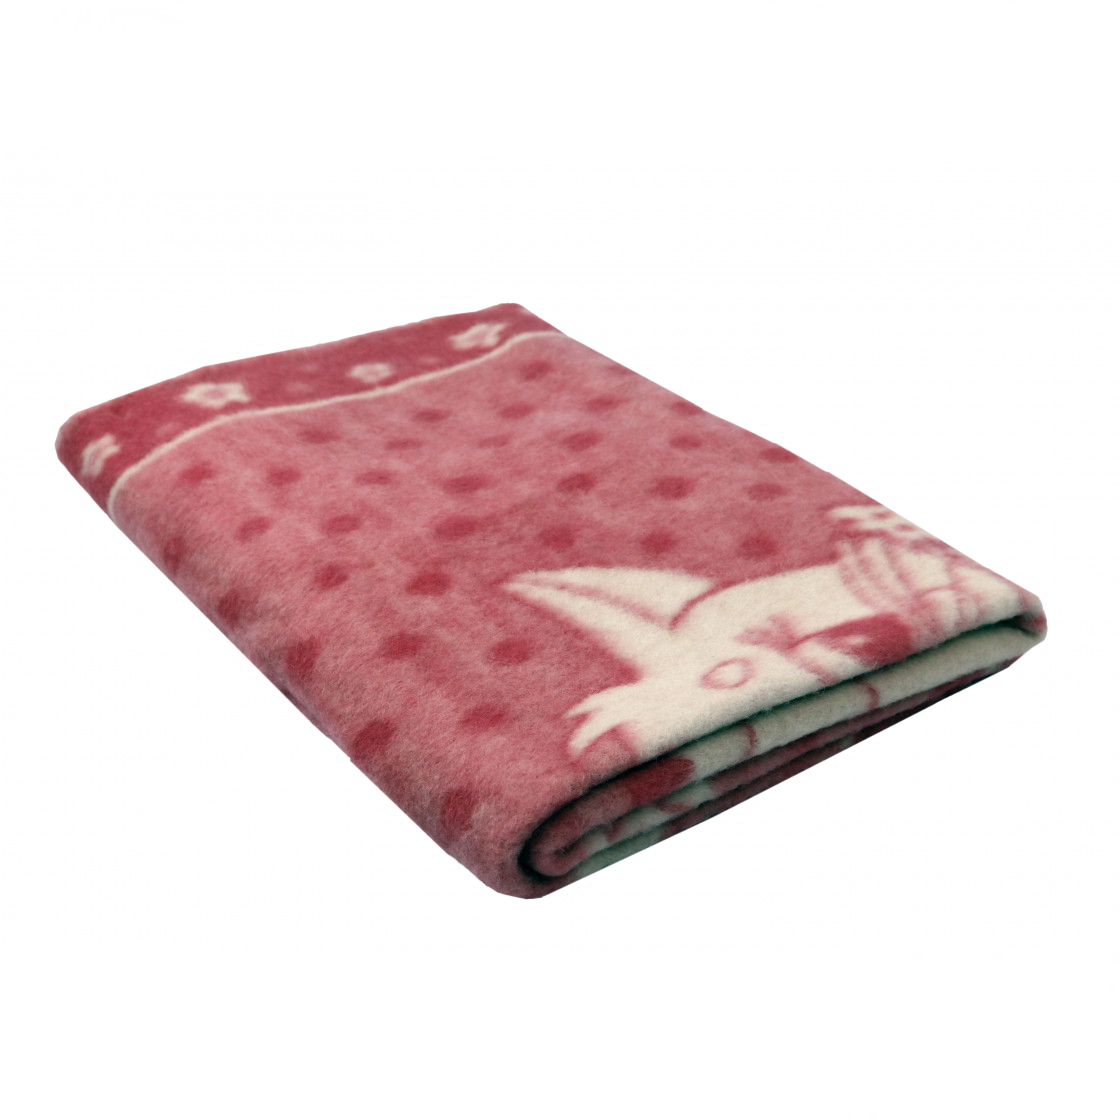 Детское одеяло Белка цвет: розовый Теплое (100х140 см), размер 100х140 см